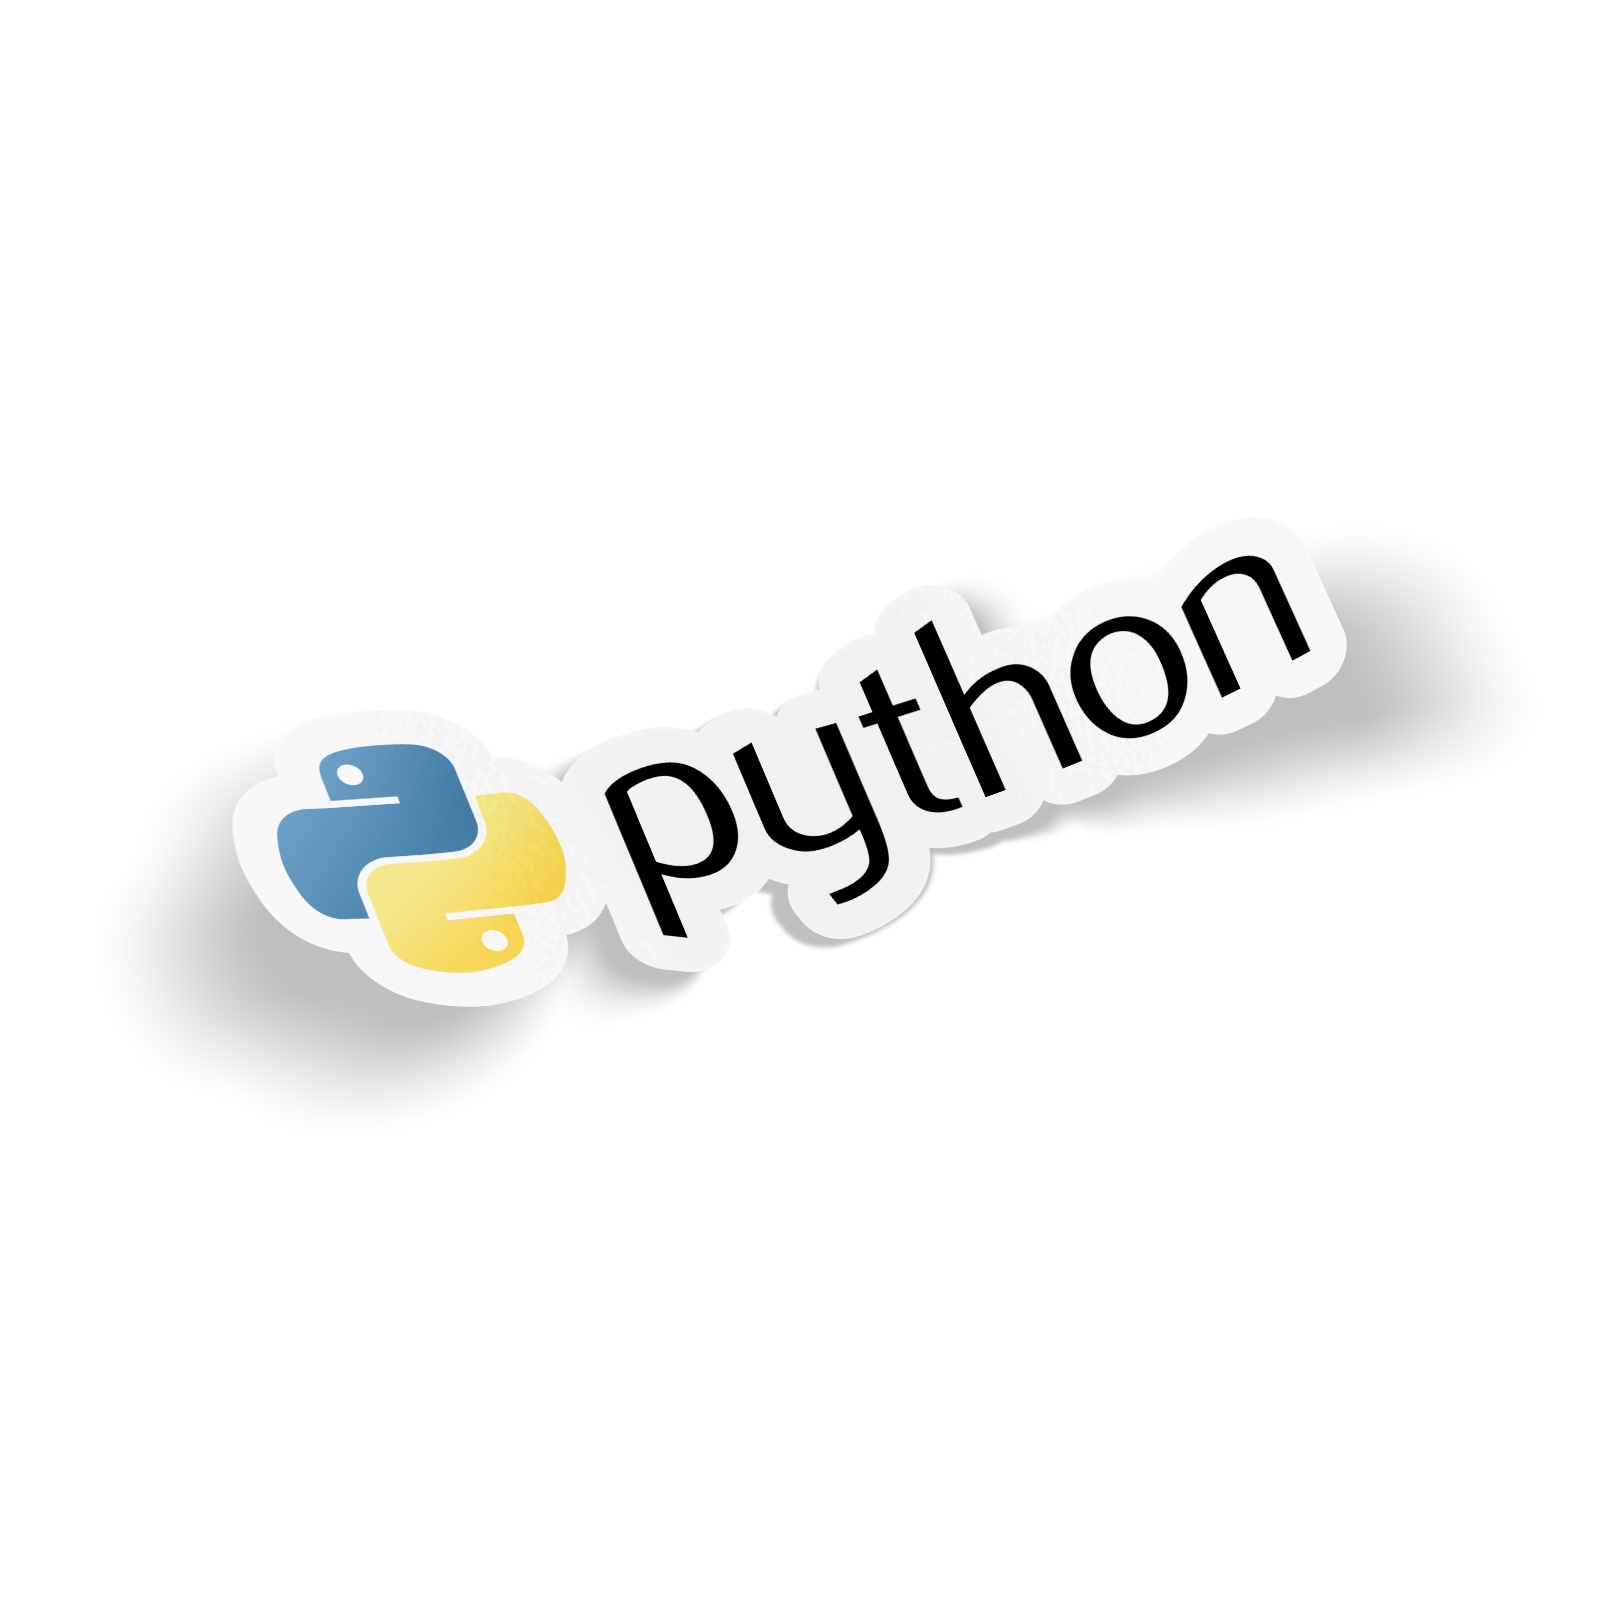 Логотип языка python. Значок питона. Python логотип. Питон язык программирования лого. Логотип питона без фона.